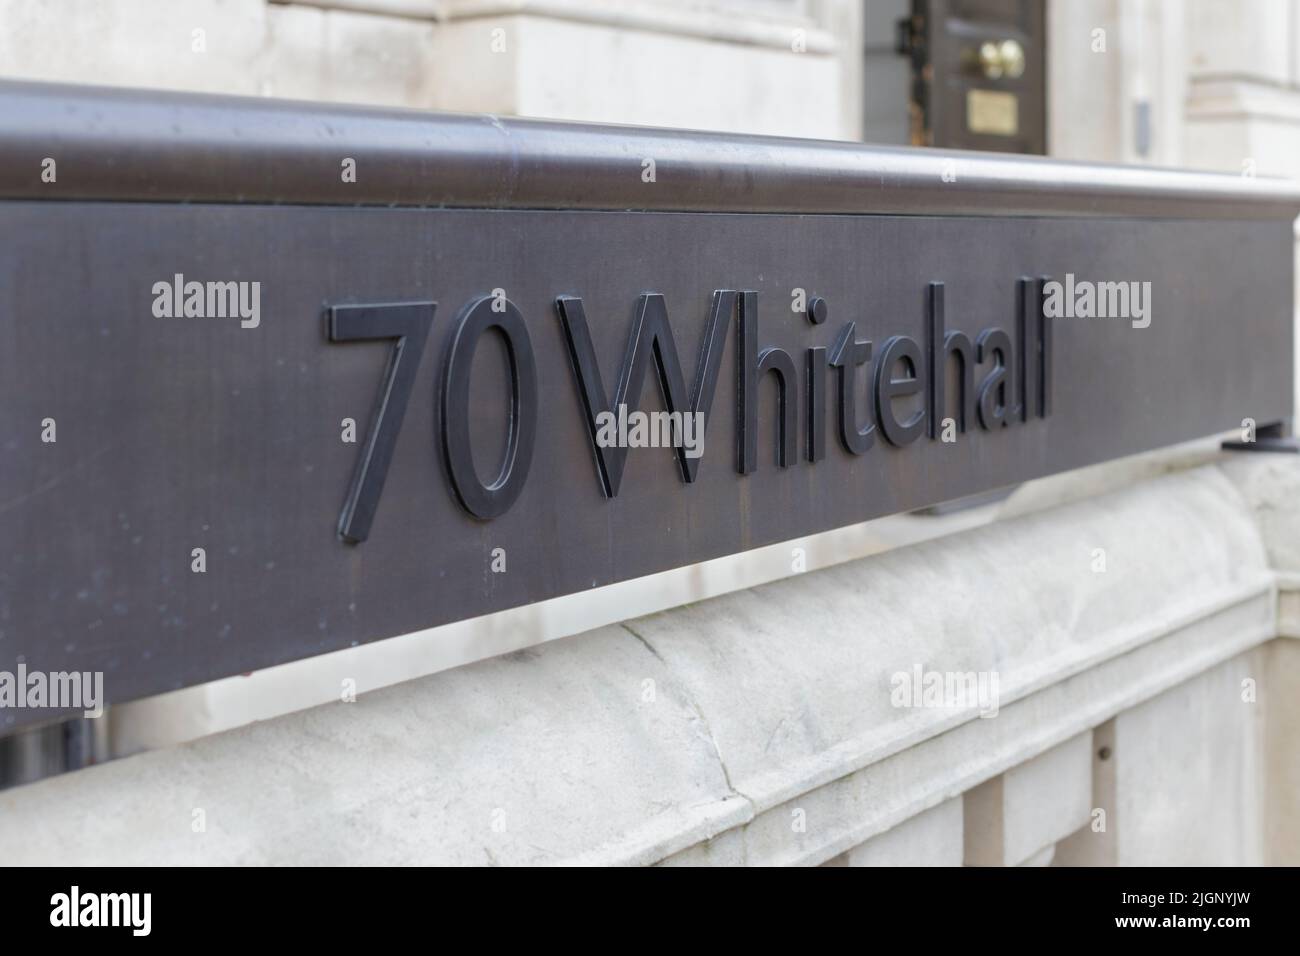 70 Whitehall sign, Londres, Inglaterra, Foto de stock